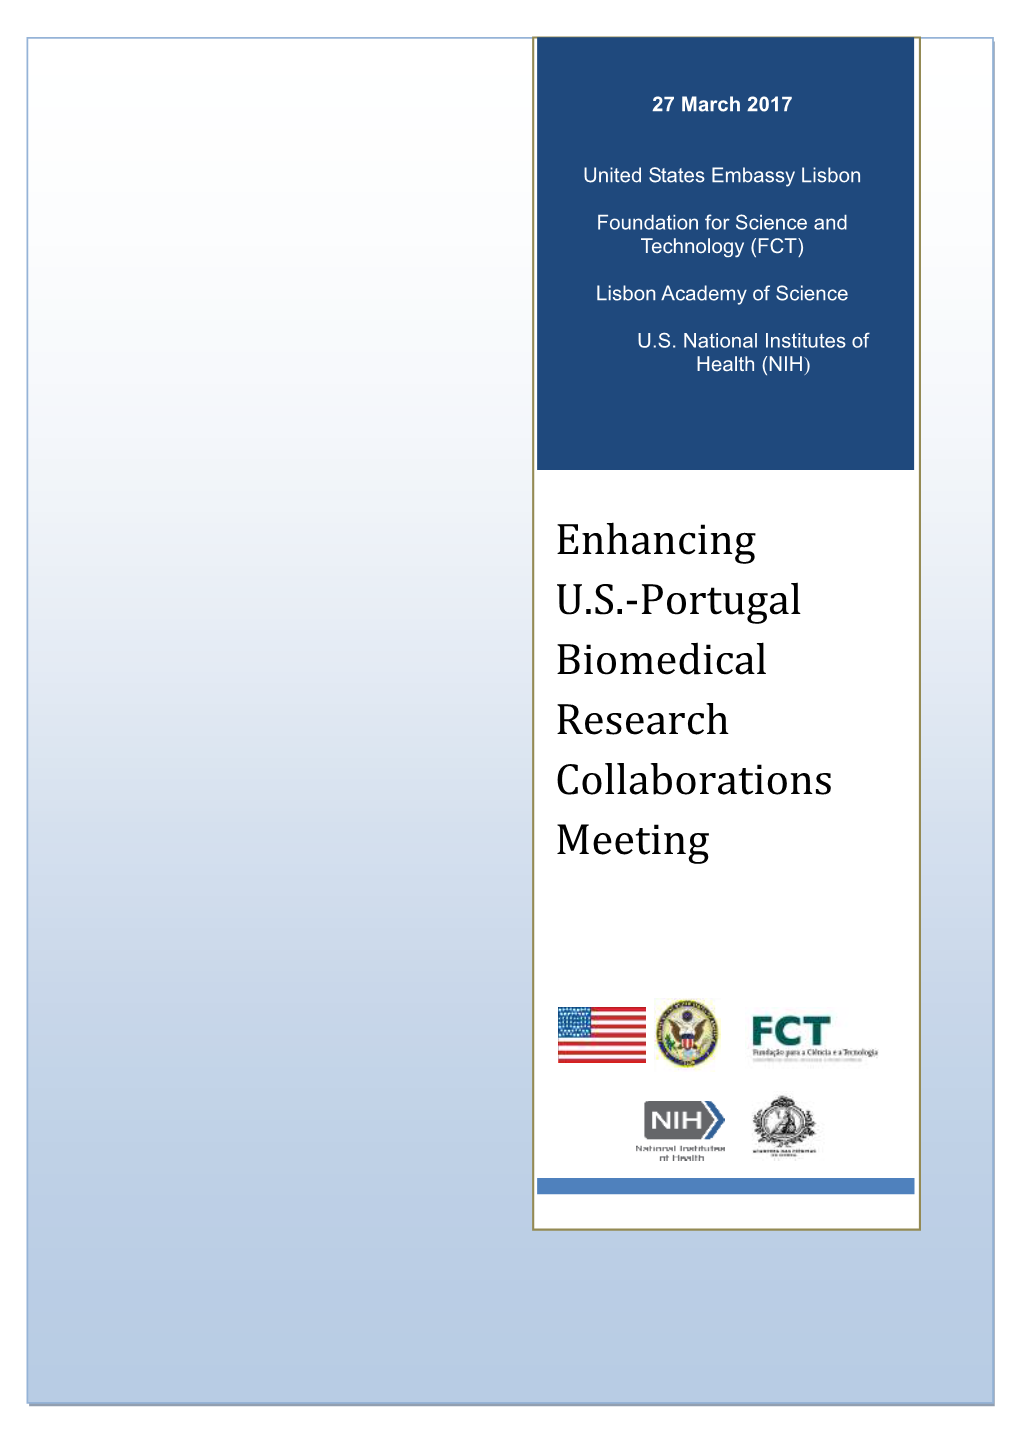 Enhancing U.S.-Portugal Biomedical Research Collaborations Meeting